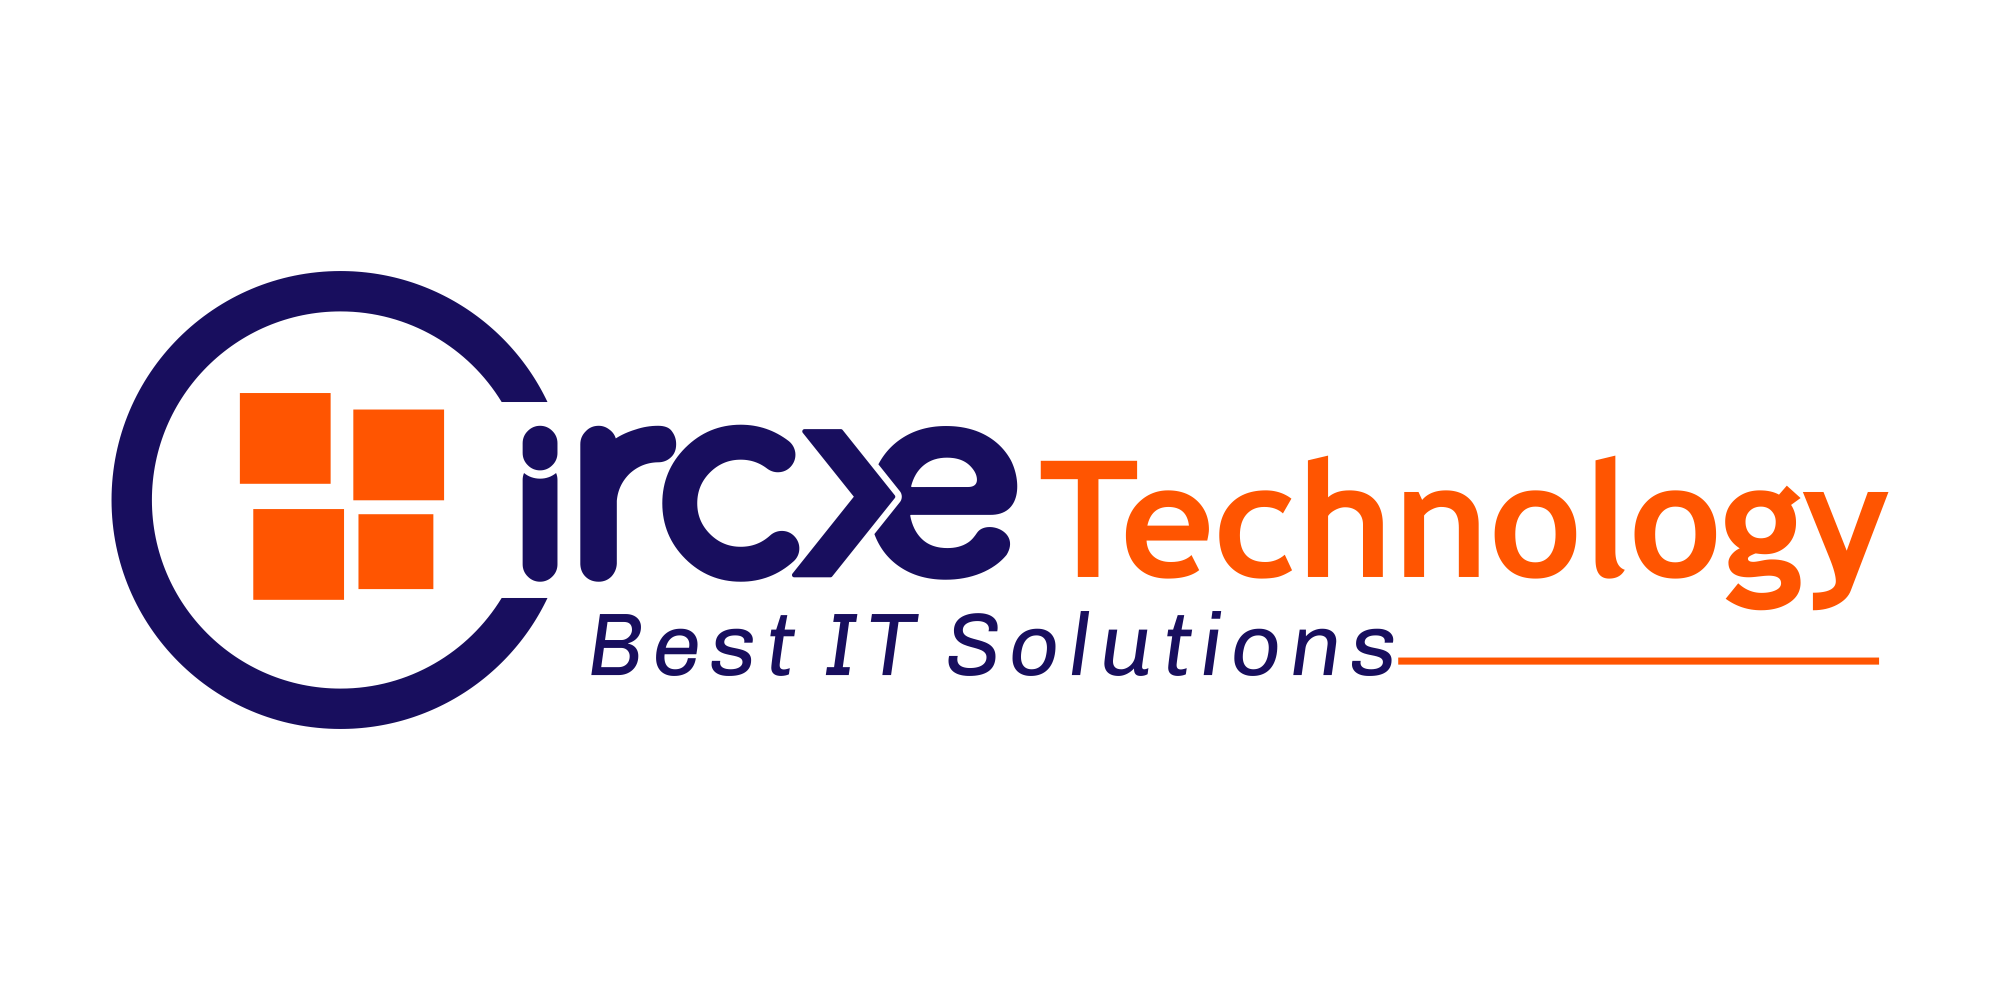 CircleTechnologyLtd logo